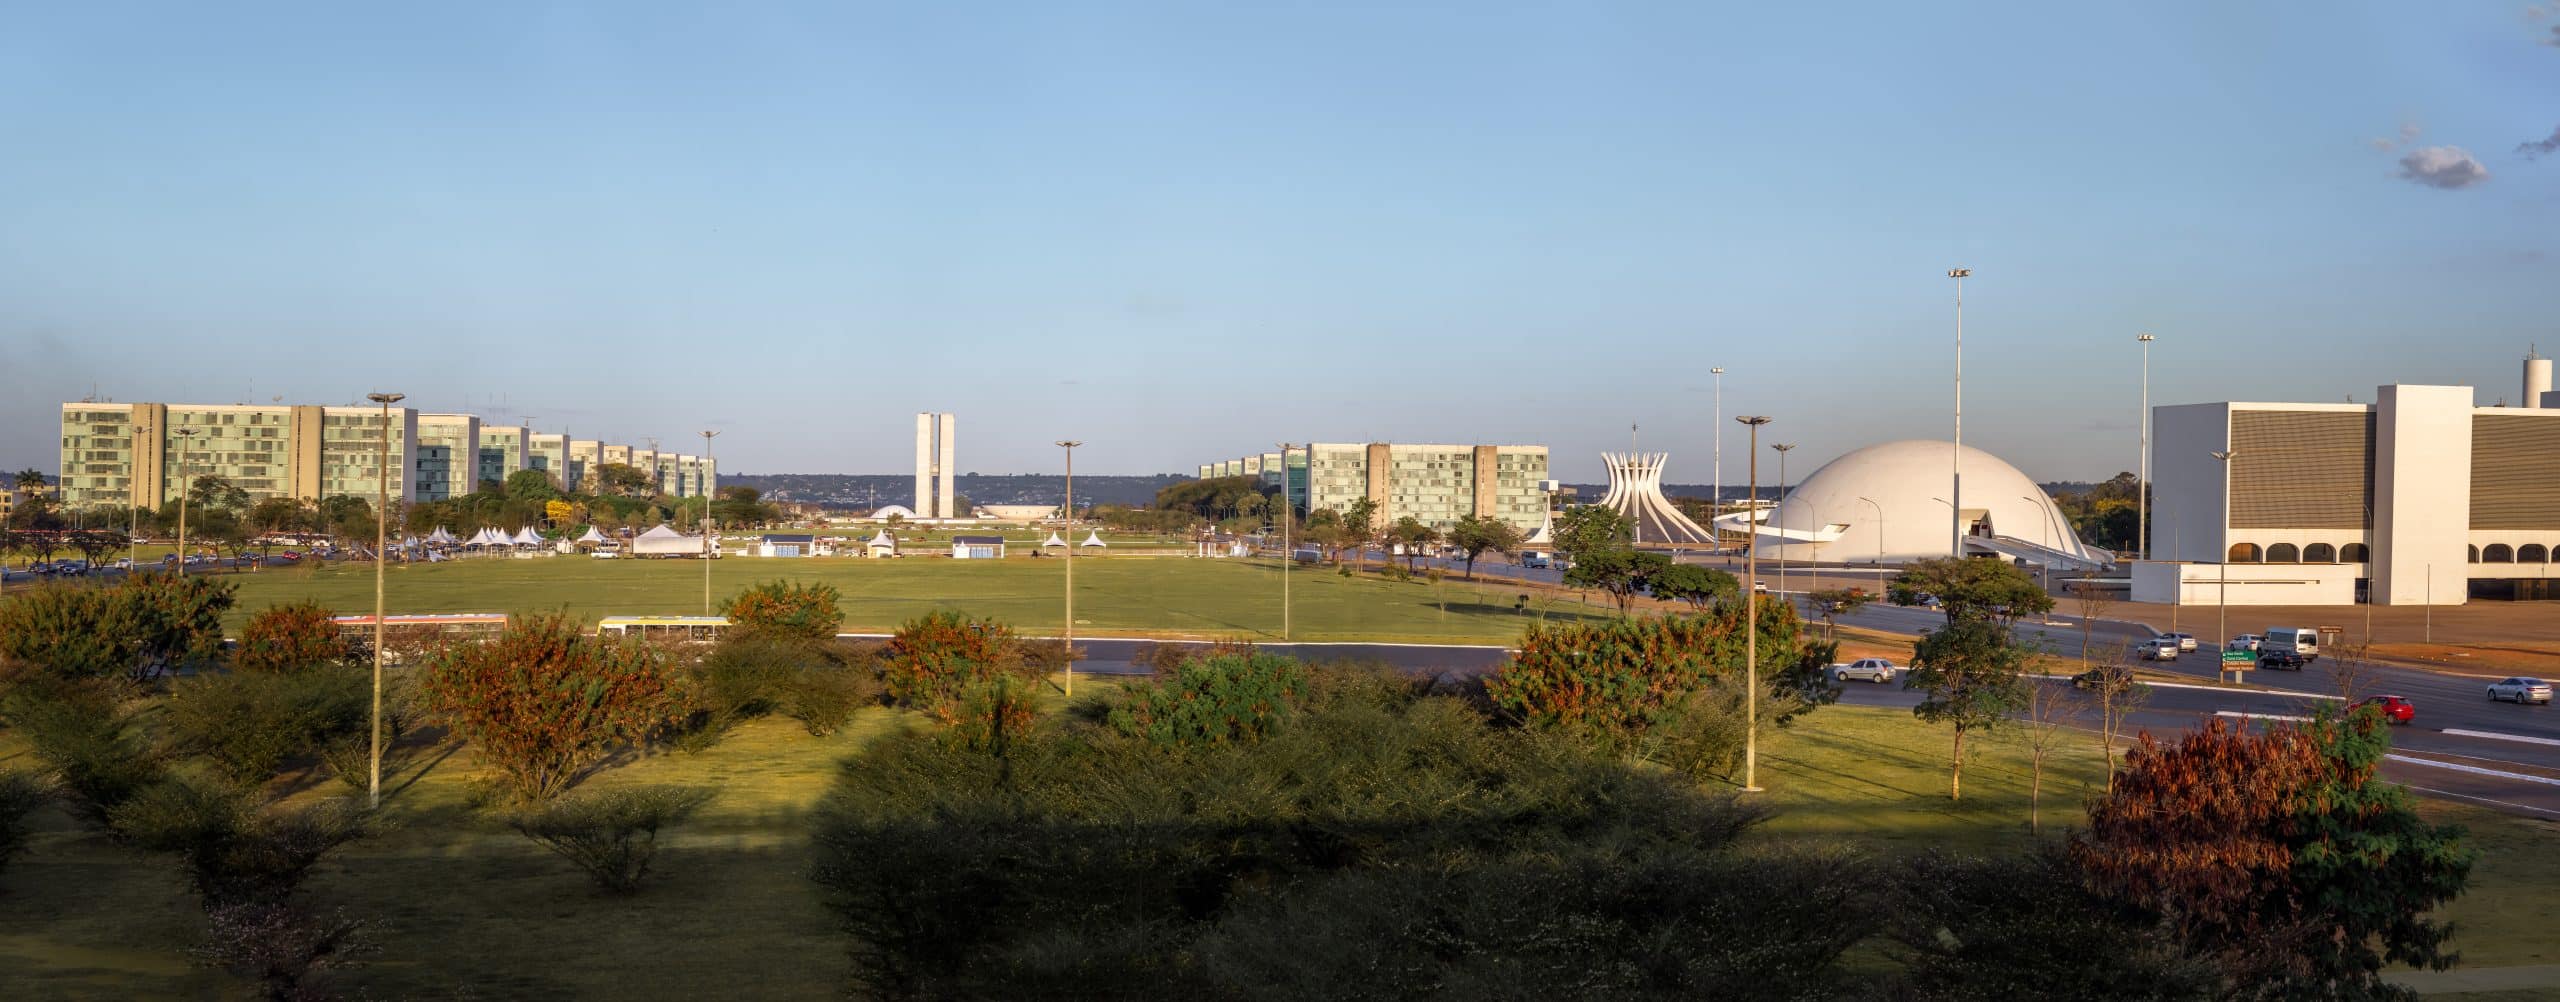 Panoramic view of Brasilia and Esplanada dos Ministerios (Esplanade of the Ministeries) - Brasilia, Distrito Federal, Brazil